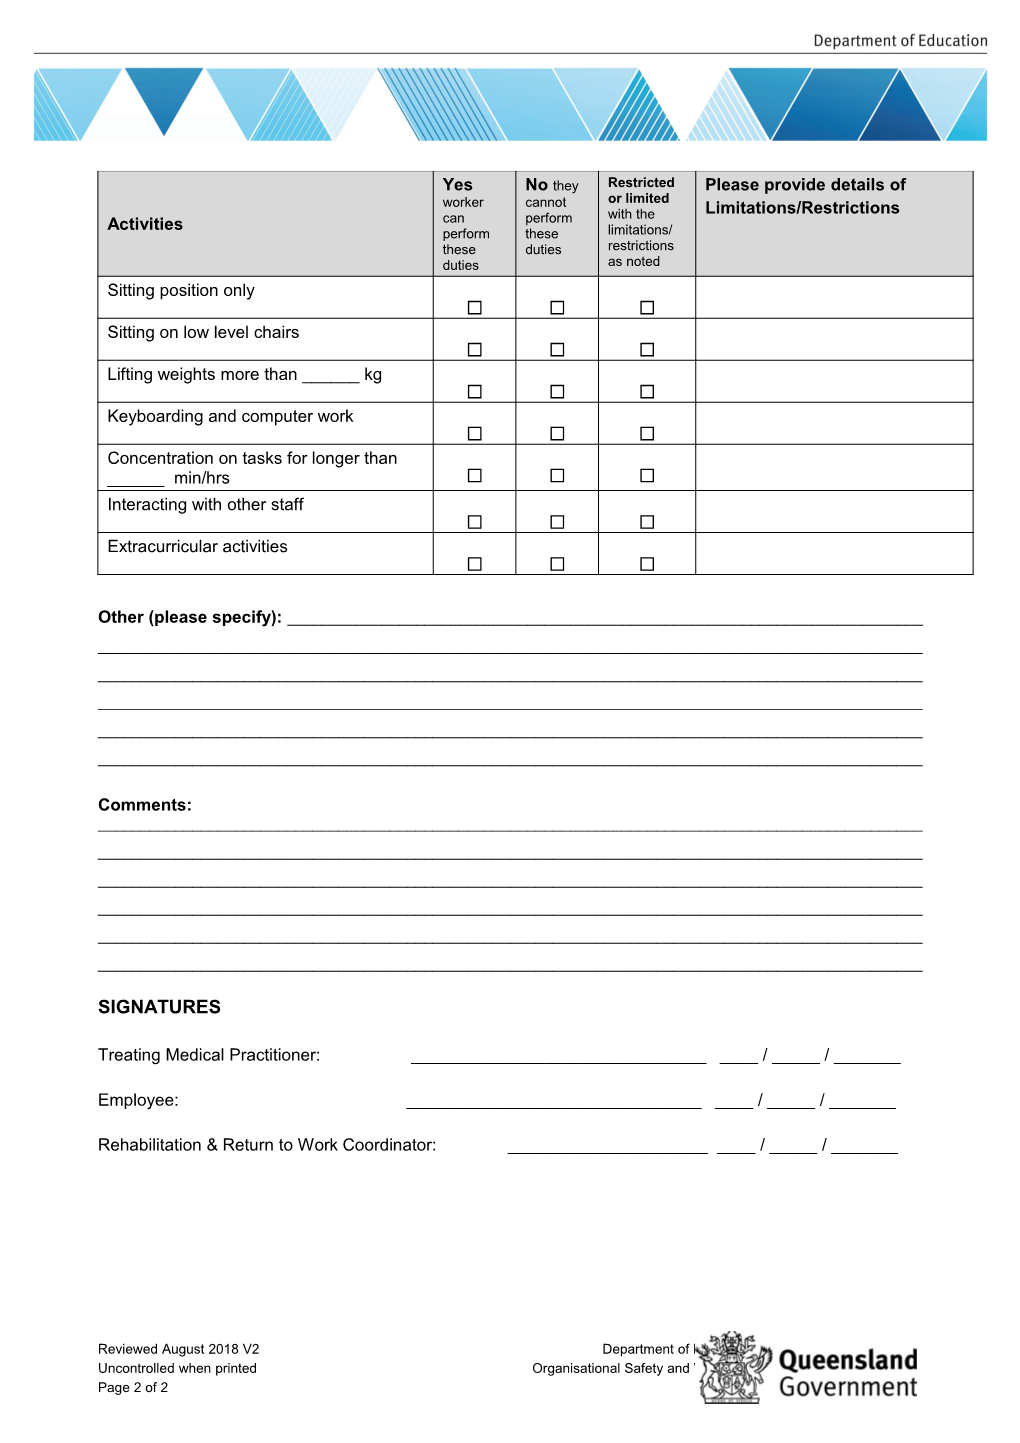 CM08(B) - Work Capabilities Checklist - Teacher Aides